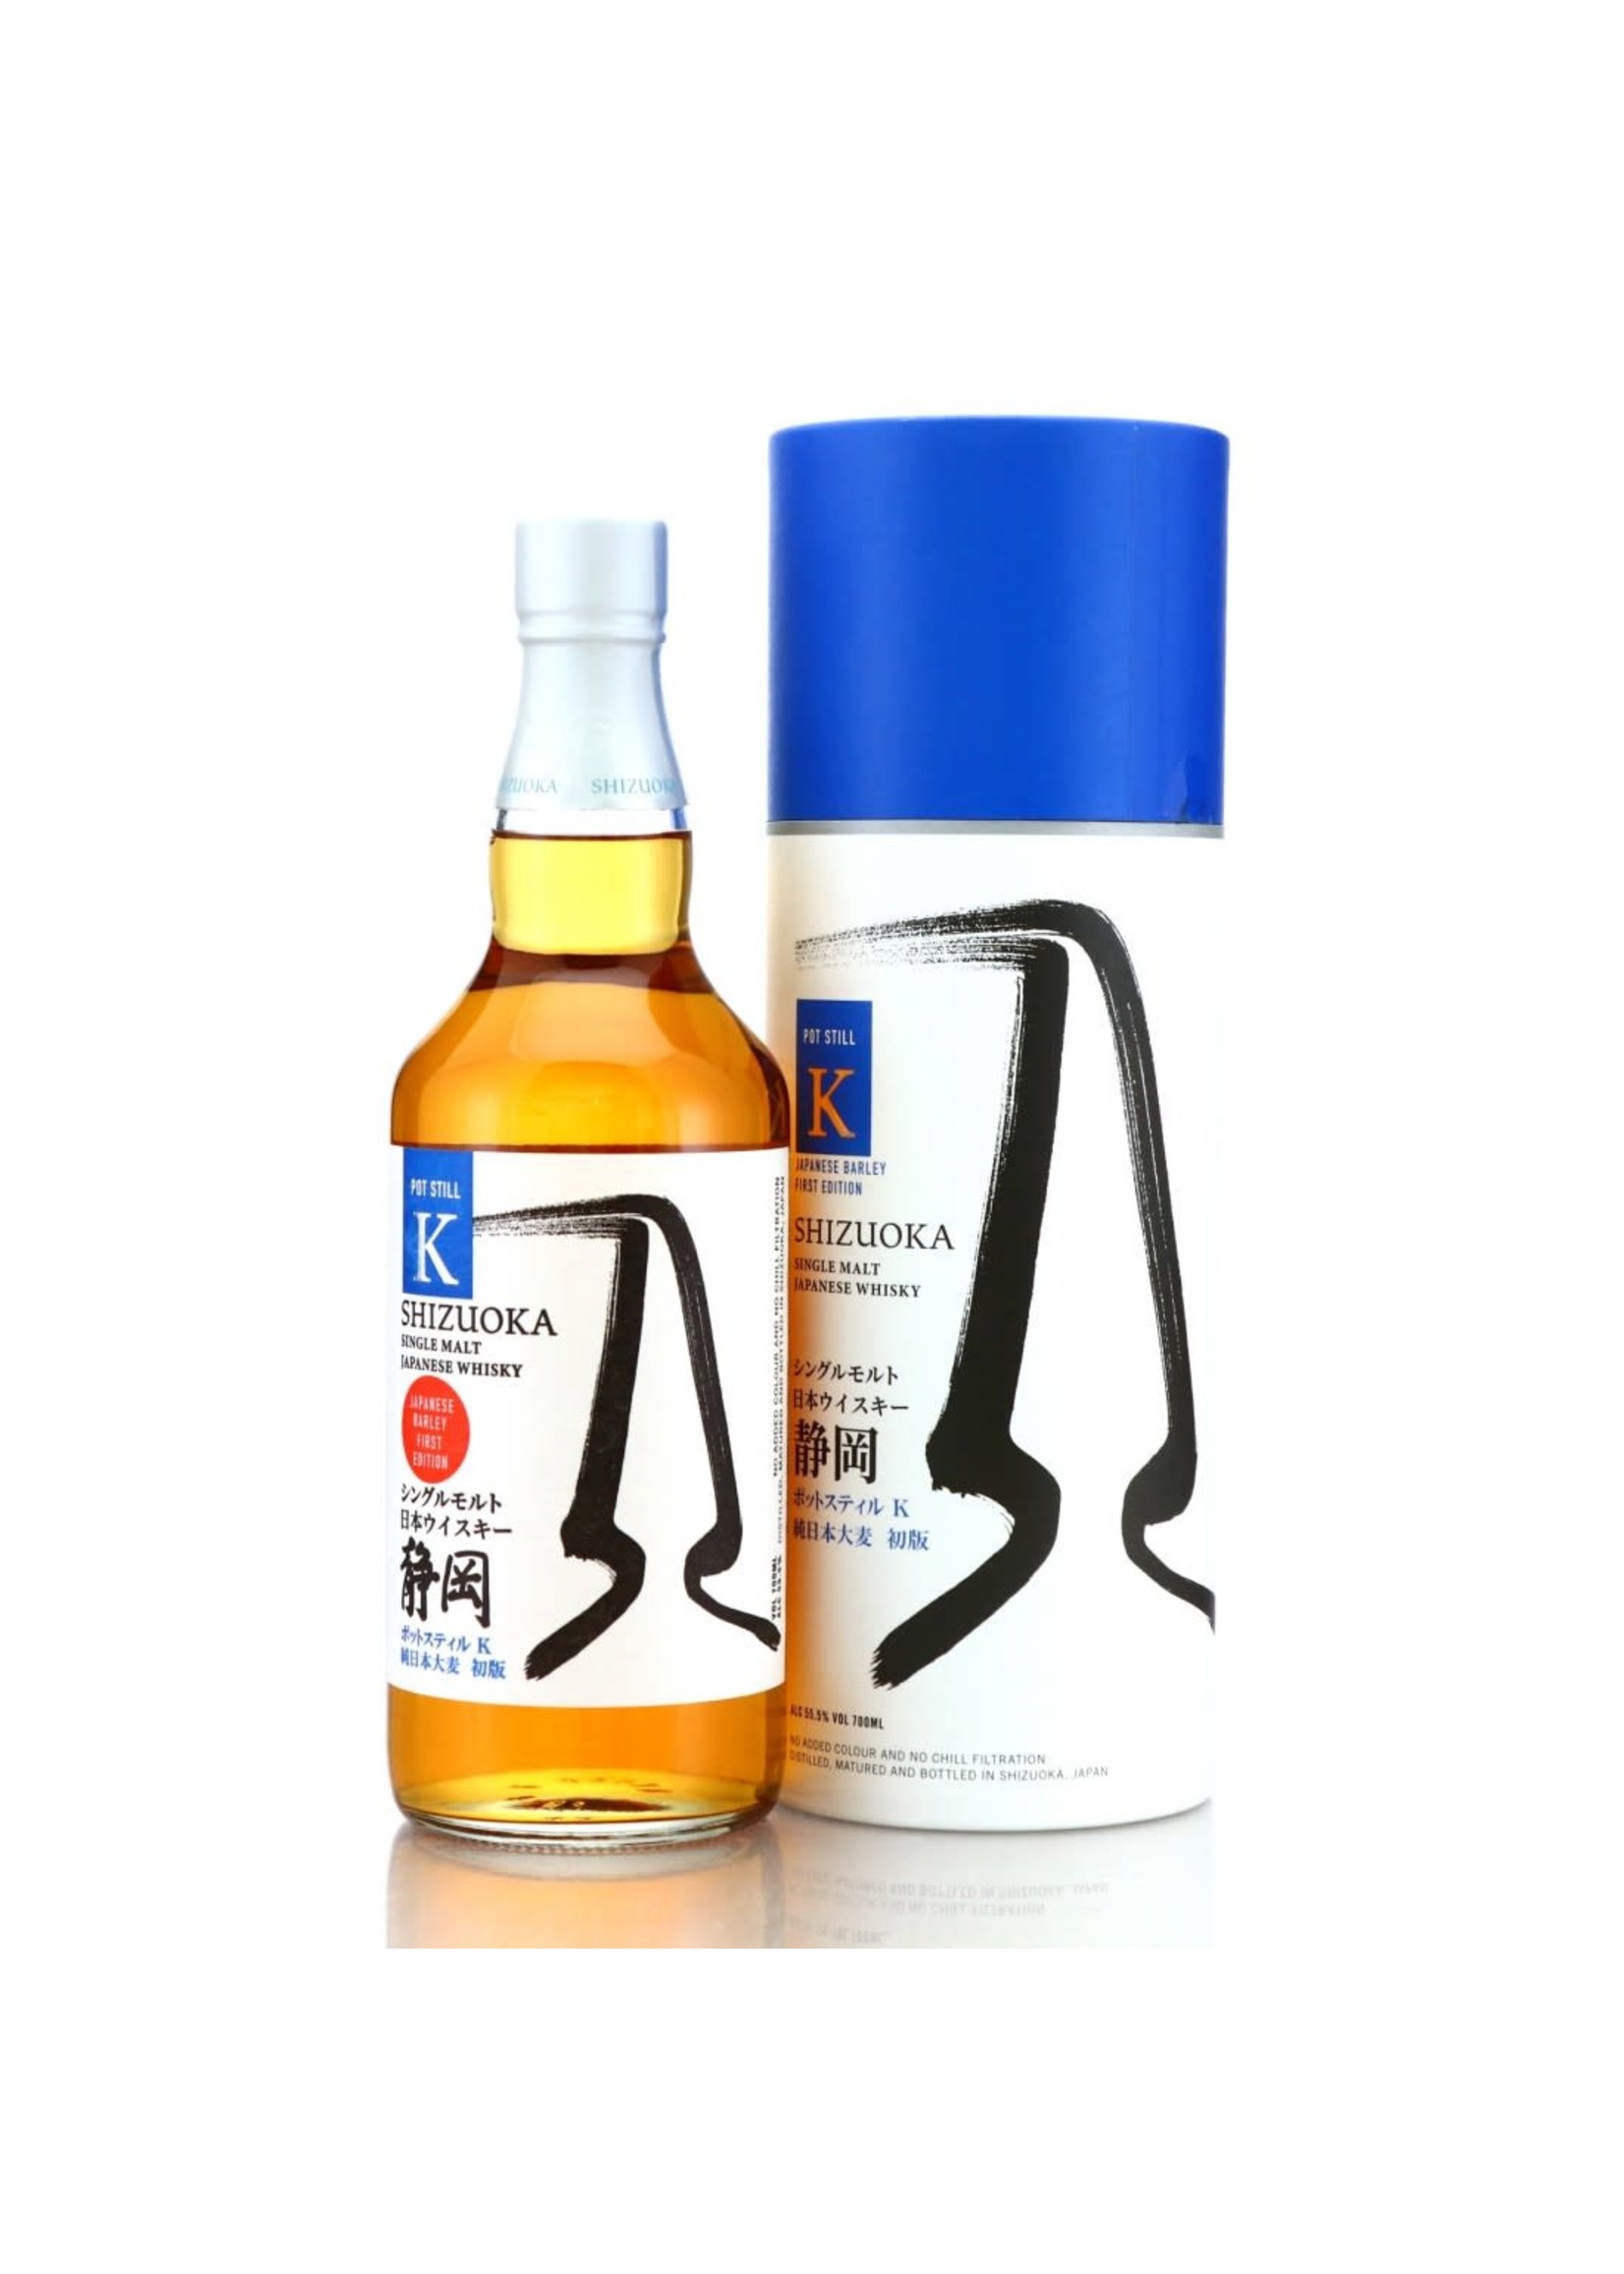 Shizuoka Shizuoka / K Pot Still 100% Japanese Barley Single Malt Japanese Whisky 55.5% abv / 700mL